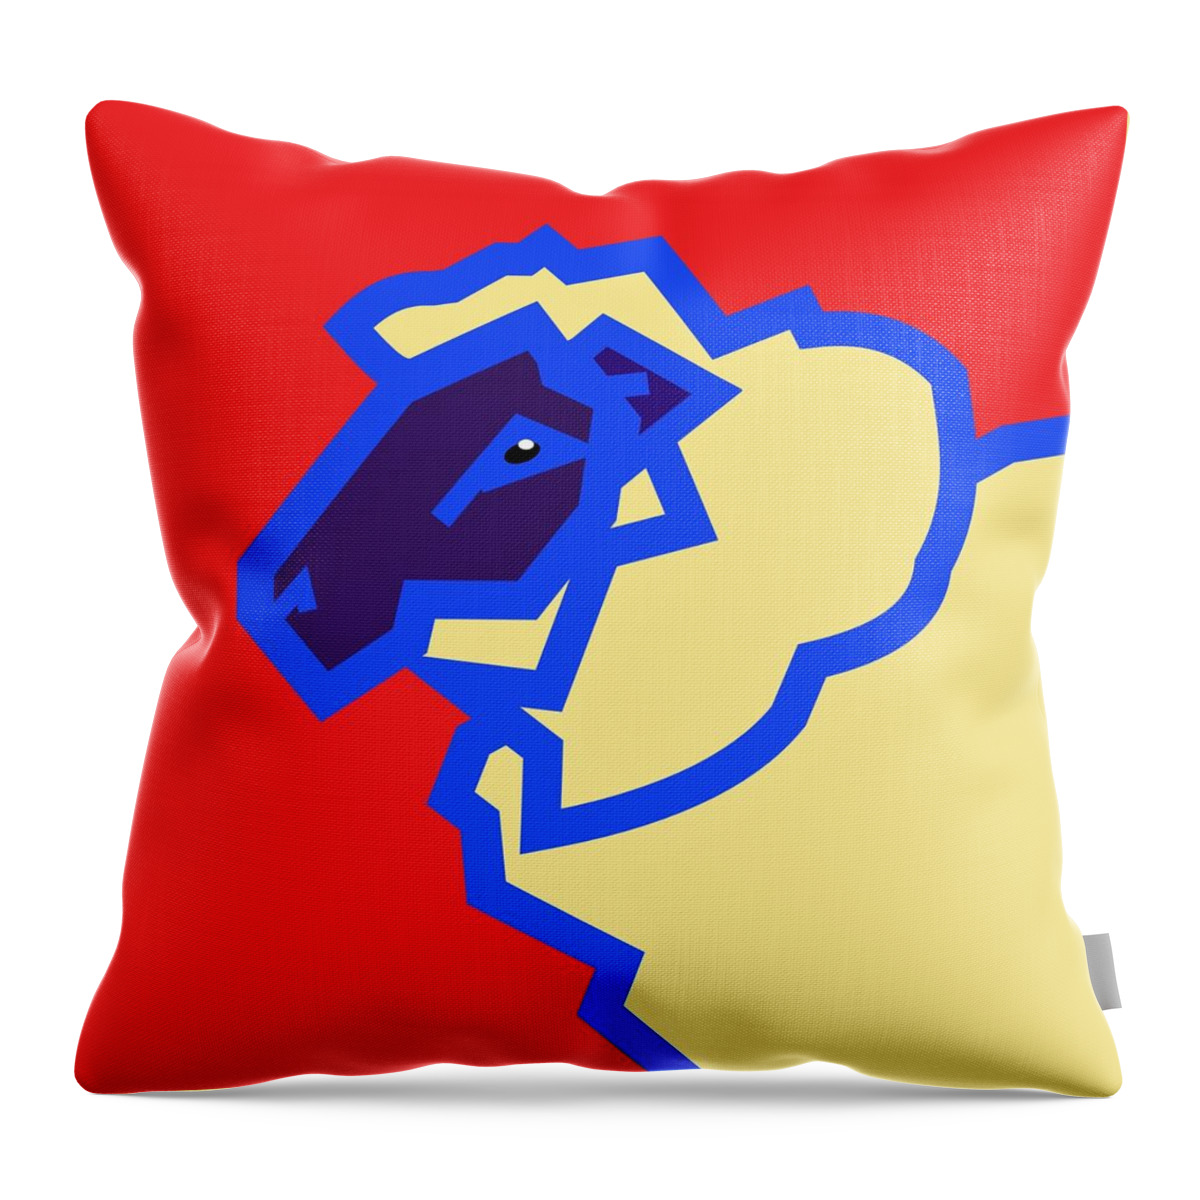 Sheep Throw Pillow featuring the digital art Sheep's head by Fatline Graphic Art